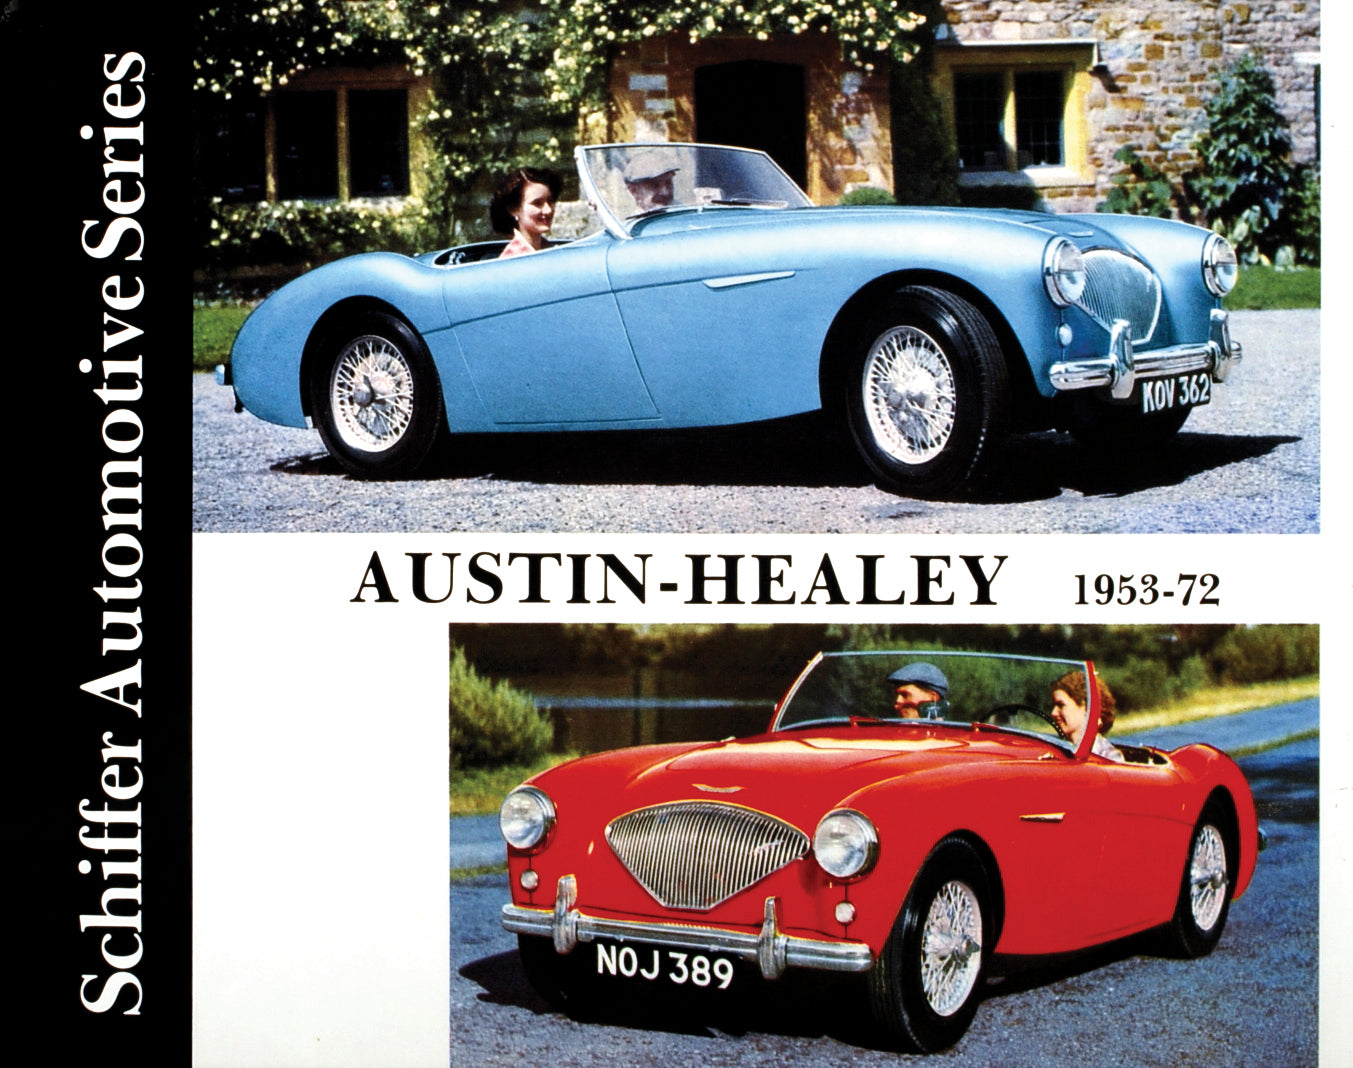 Austin-Healey 1953-1972